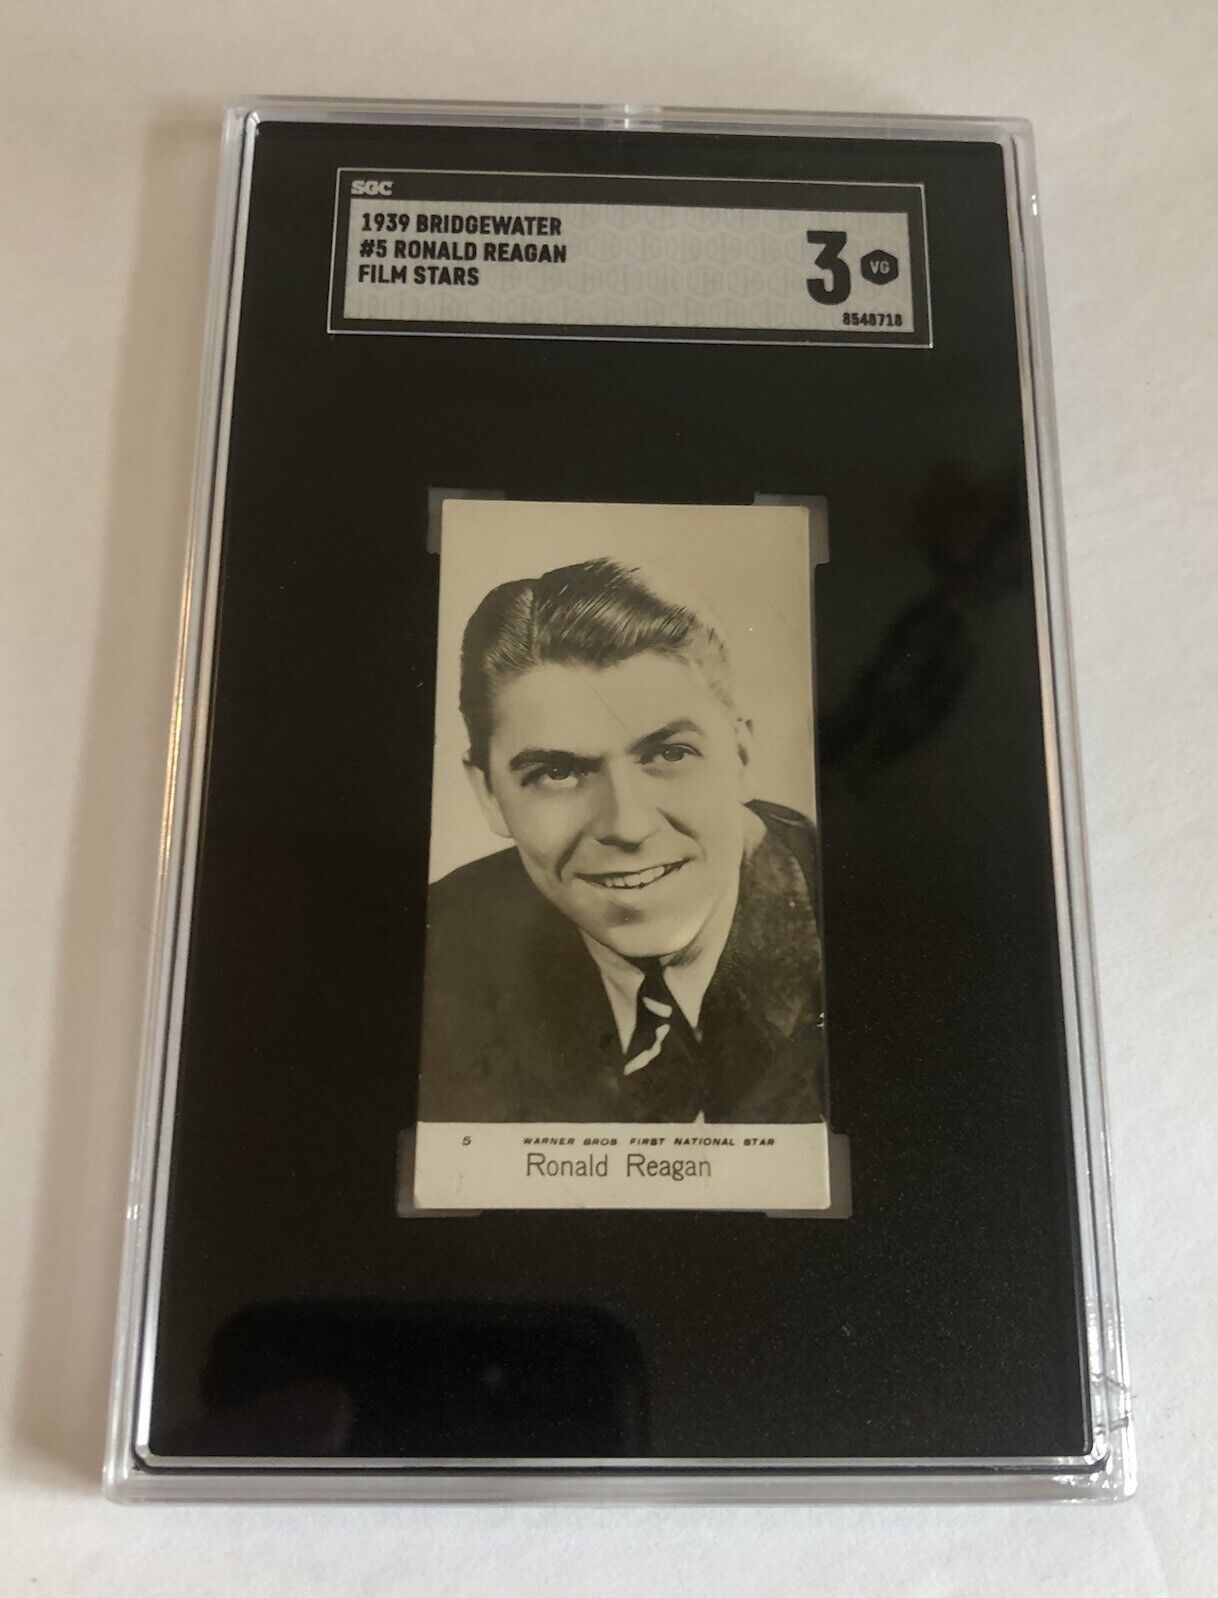 RARE 1939 Bridgewater RONALD REAGAN Film Stars ROOKIE CARD Graded SGC 3 VG